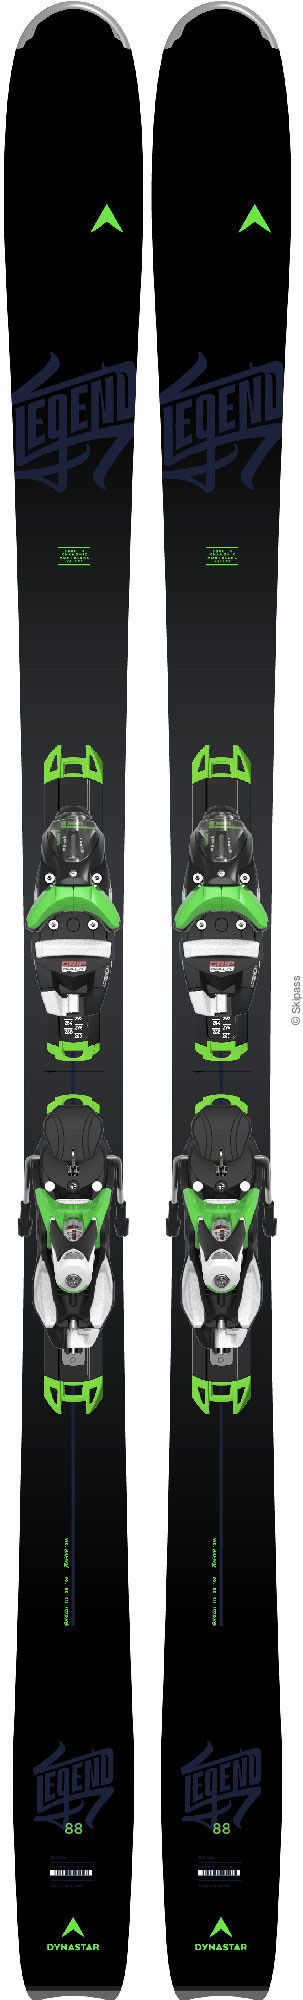 Dynastar Pack skis LEGEND 88 2020 + Fixations NX12 K DUAL B90